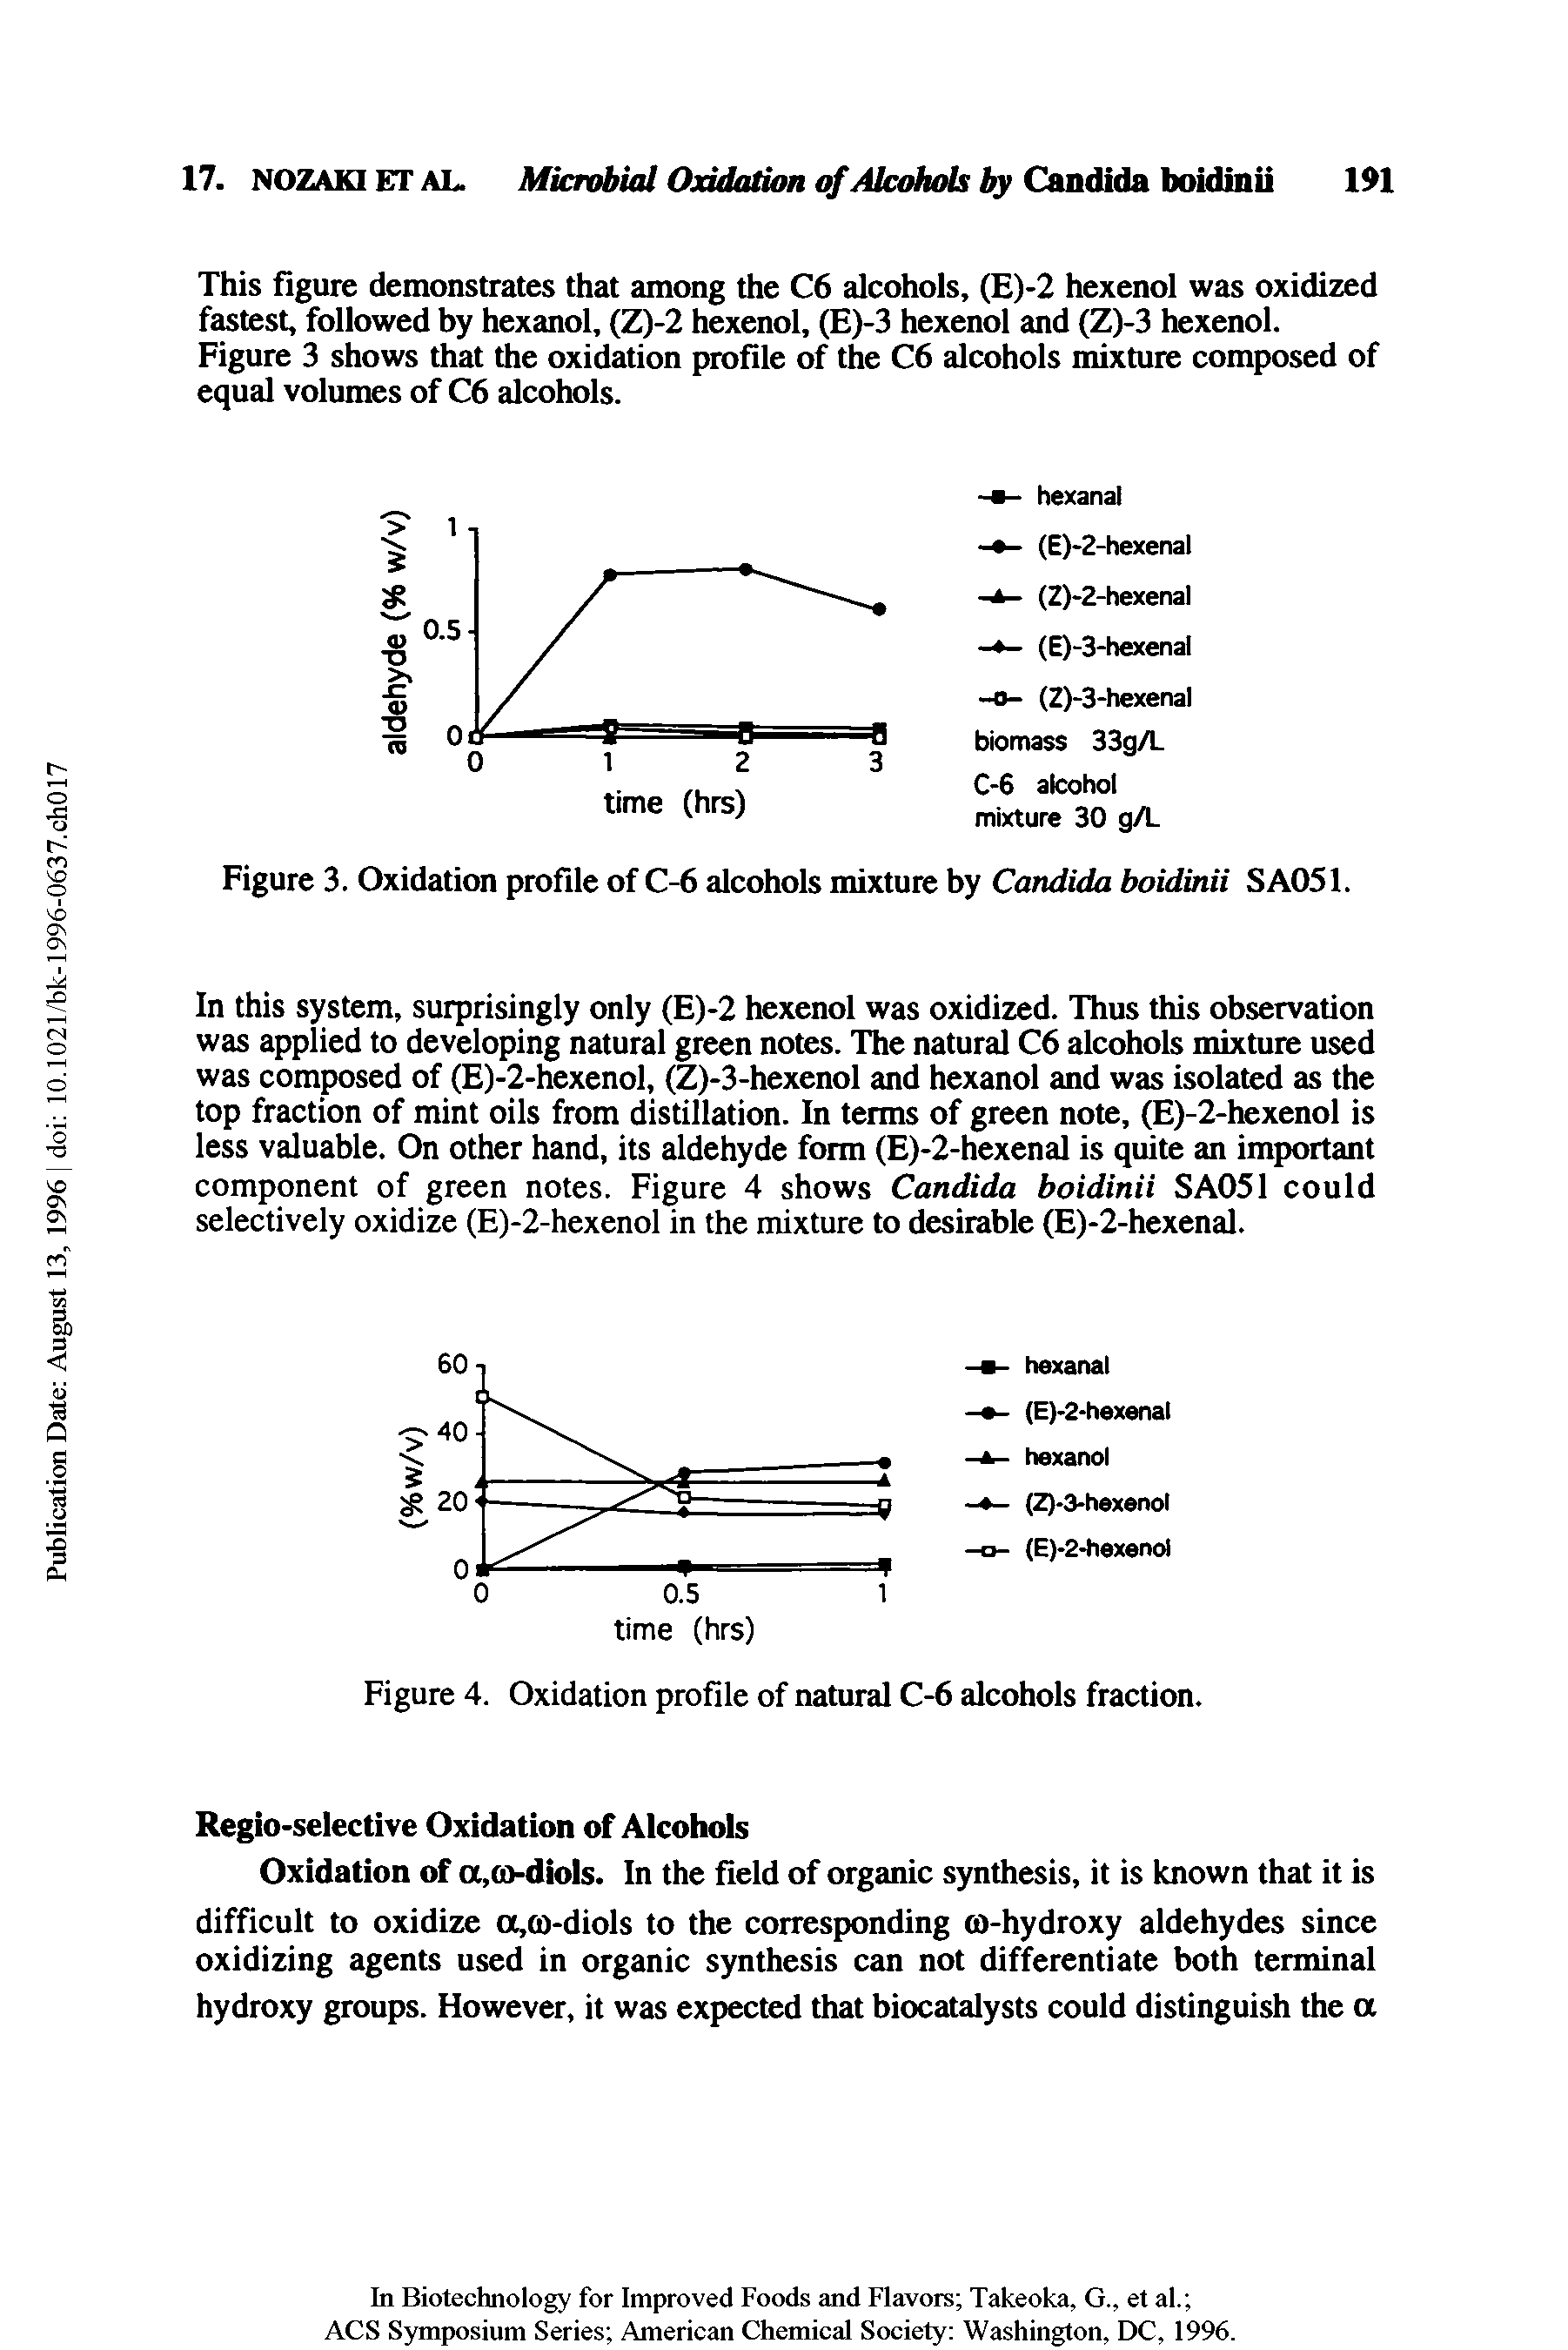 Figure 4. Oxidation profile of natural C-6 alcohols fraction.